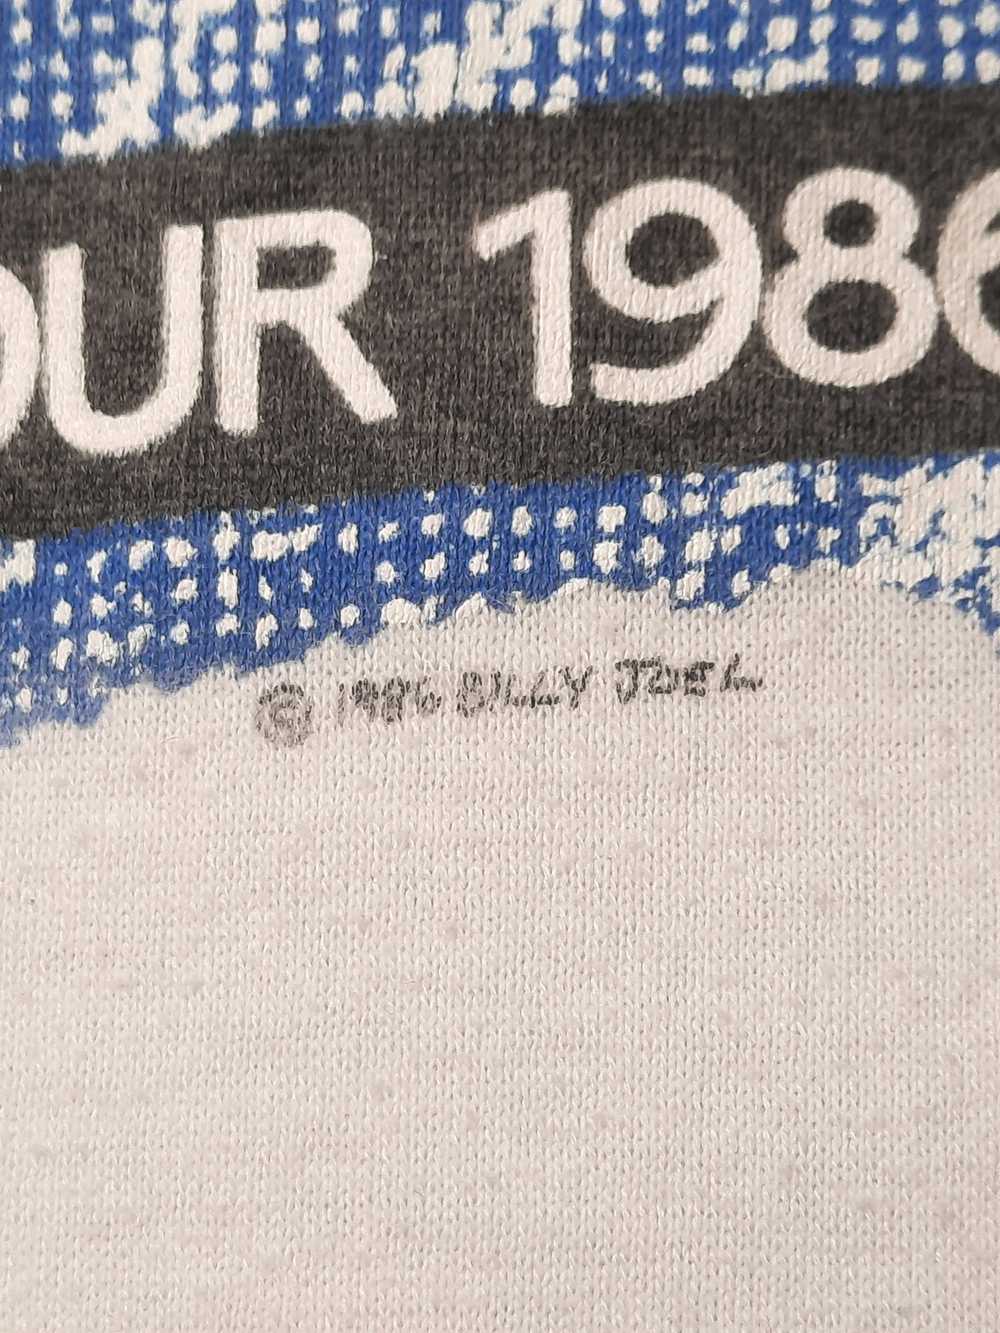 Billy Joel “The Bridge” Tour 1986-87 - image 3